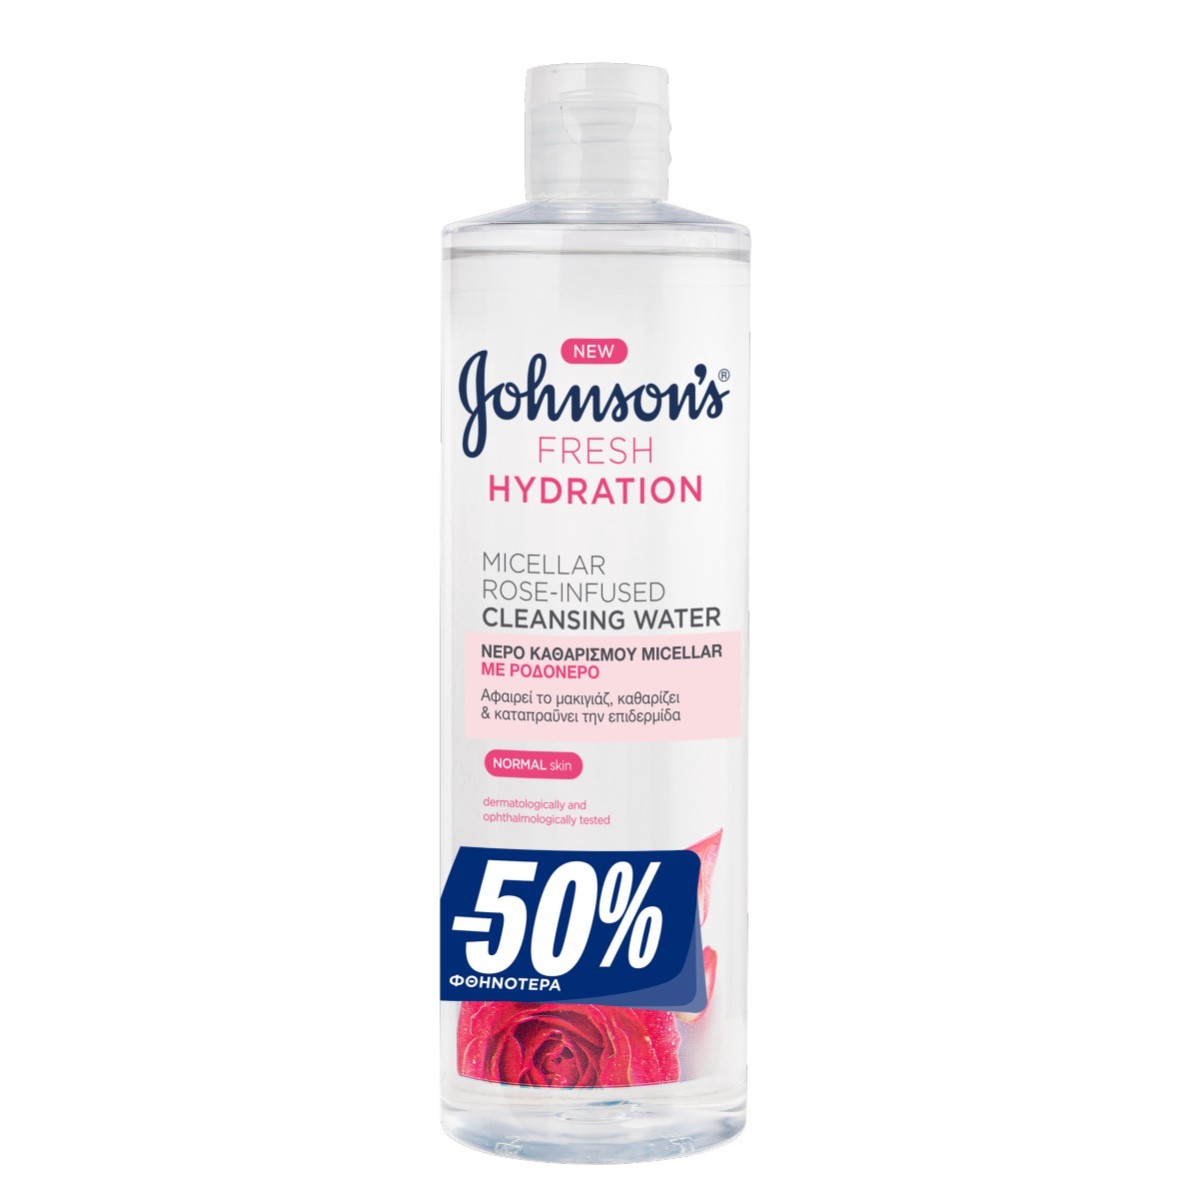 Johnson&Johnson Νερό Καθαρισμού Micellar με Ροδόνερο Johnson's (400ml) -50%